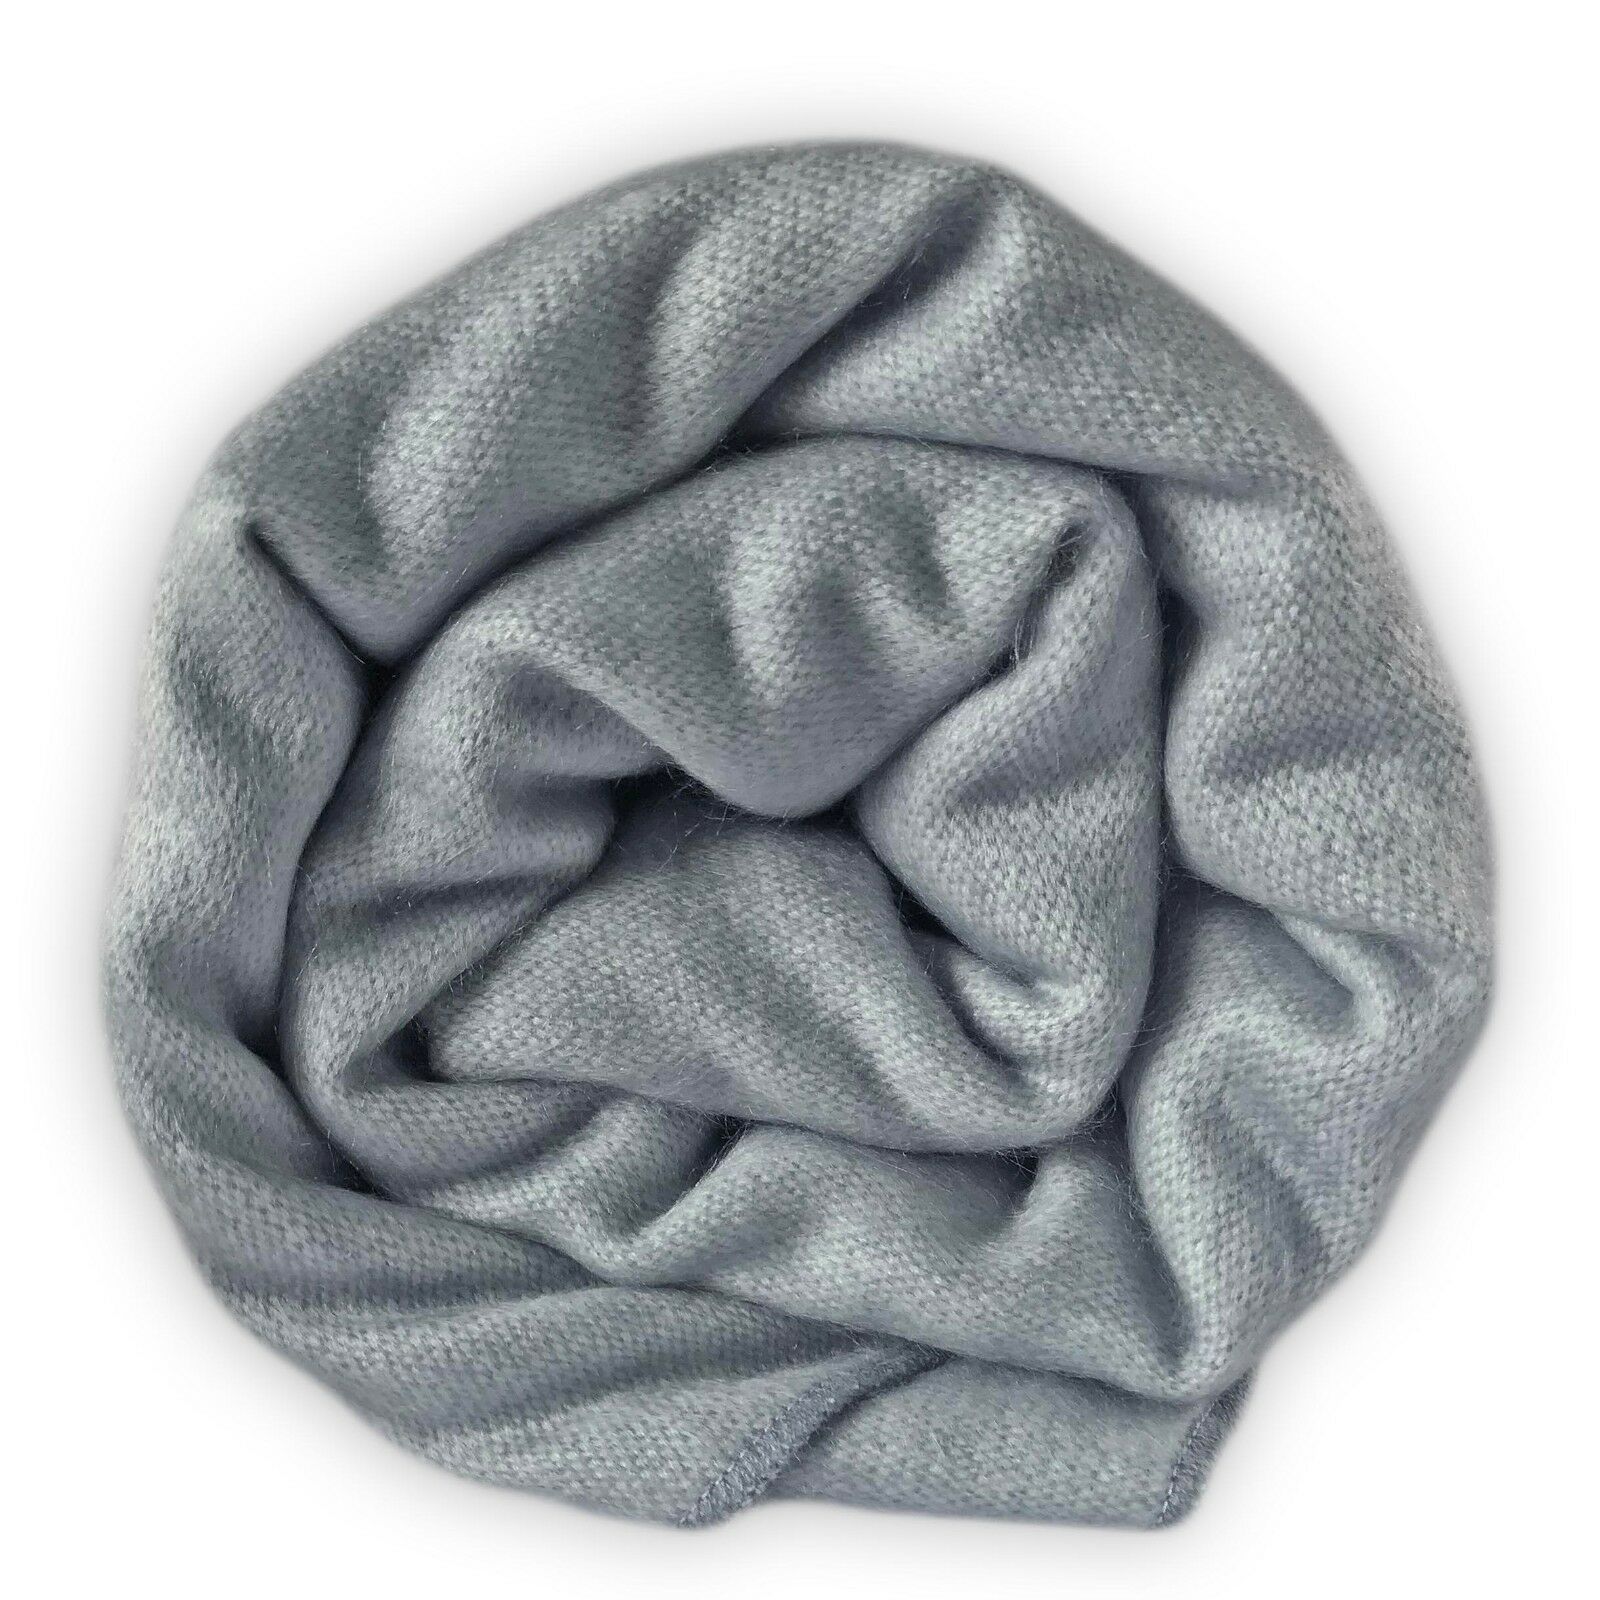 Suncamal - Baby Alpaca Wool Throw Blanket / Sofa Cover - Queen 90" x 65" - solid pattern